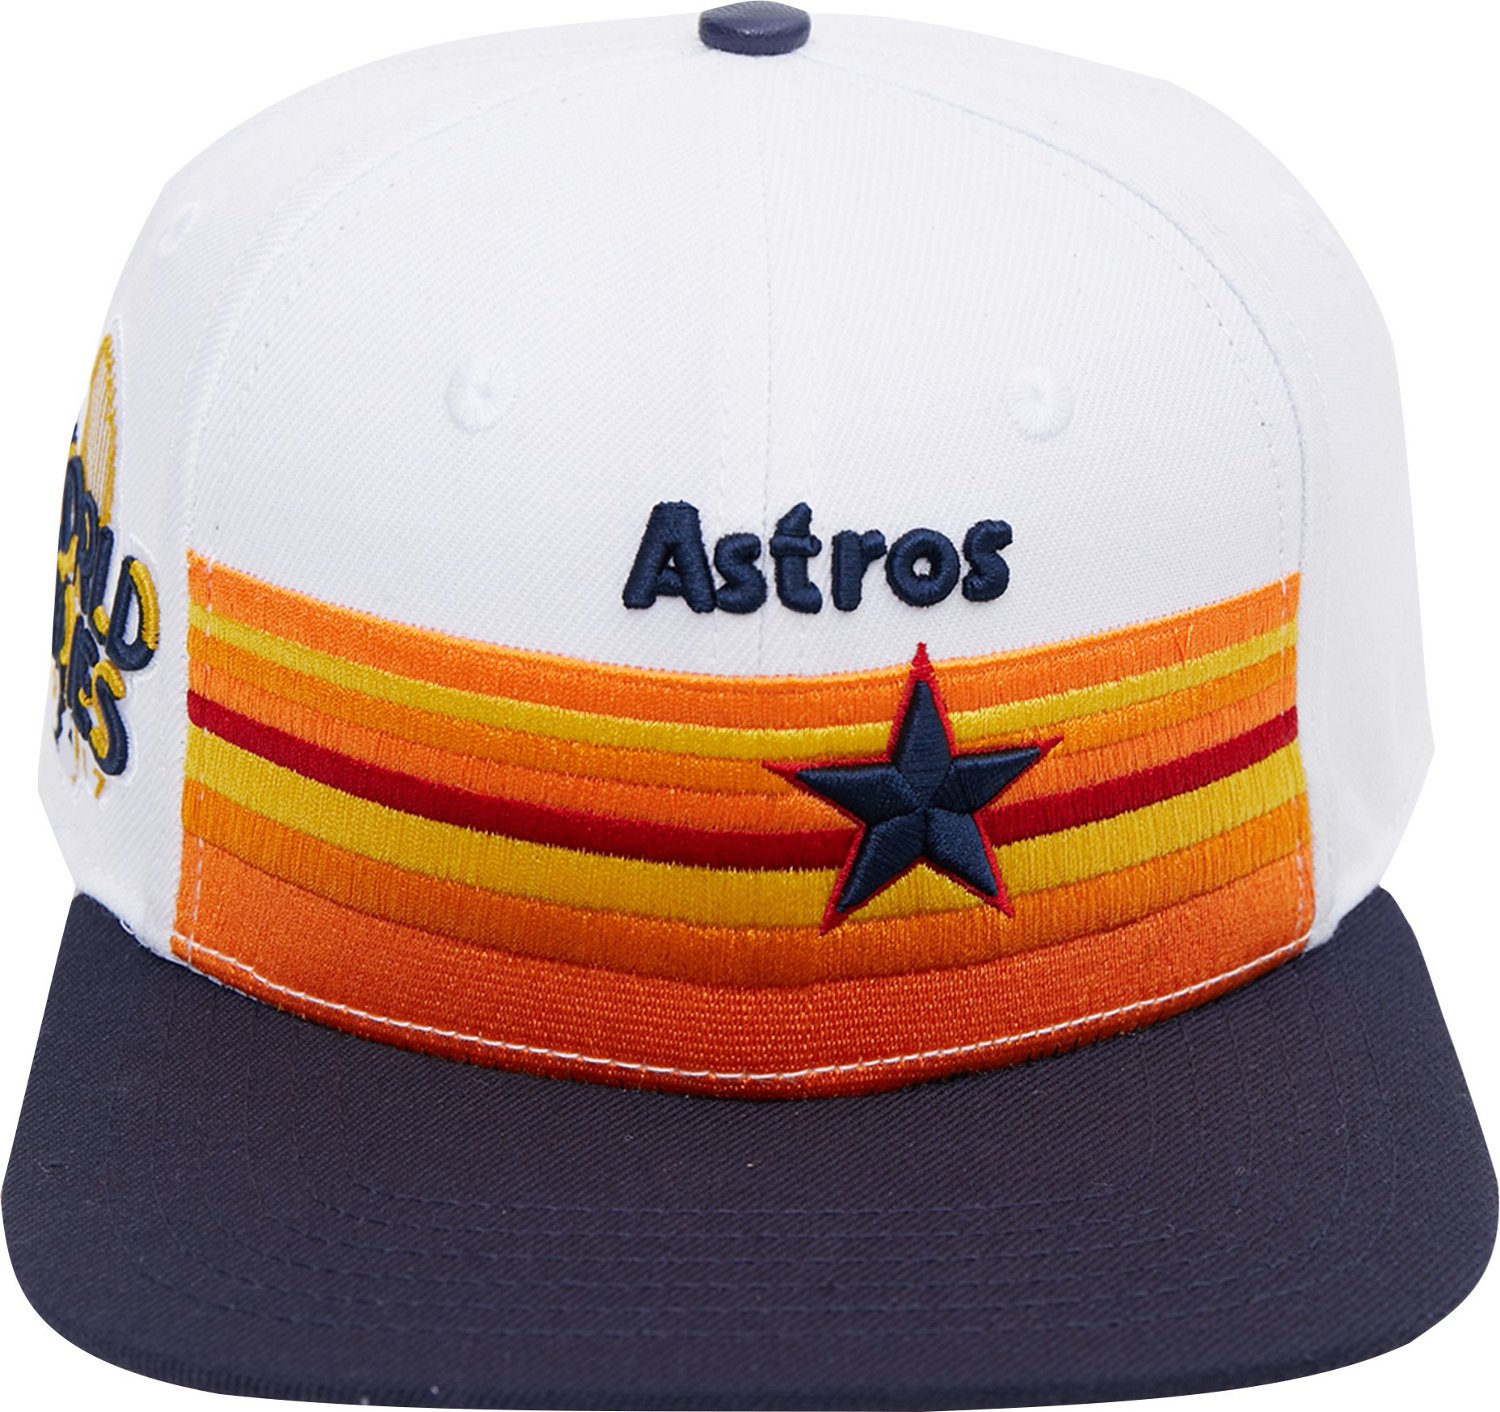 Accessories, Vintage Retro Houston Astros Hat